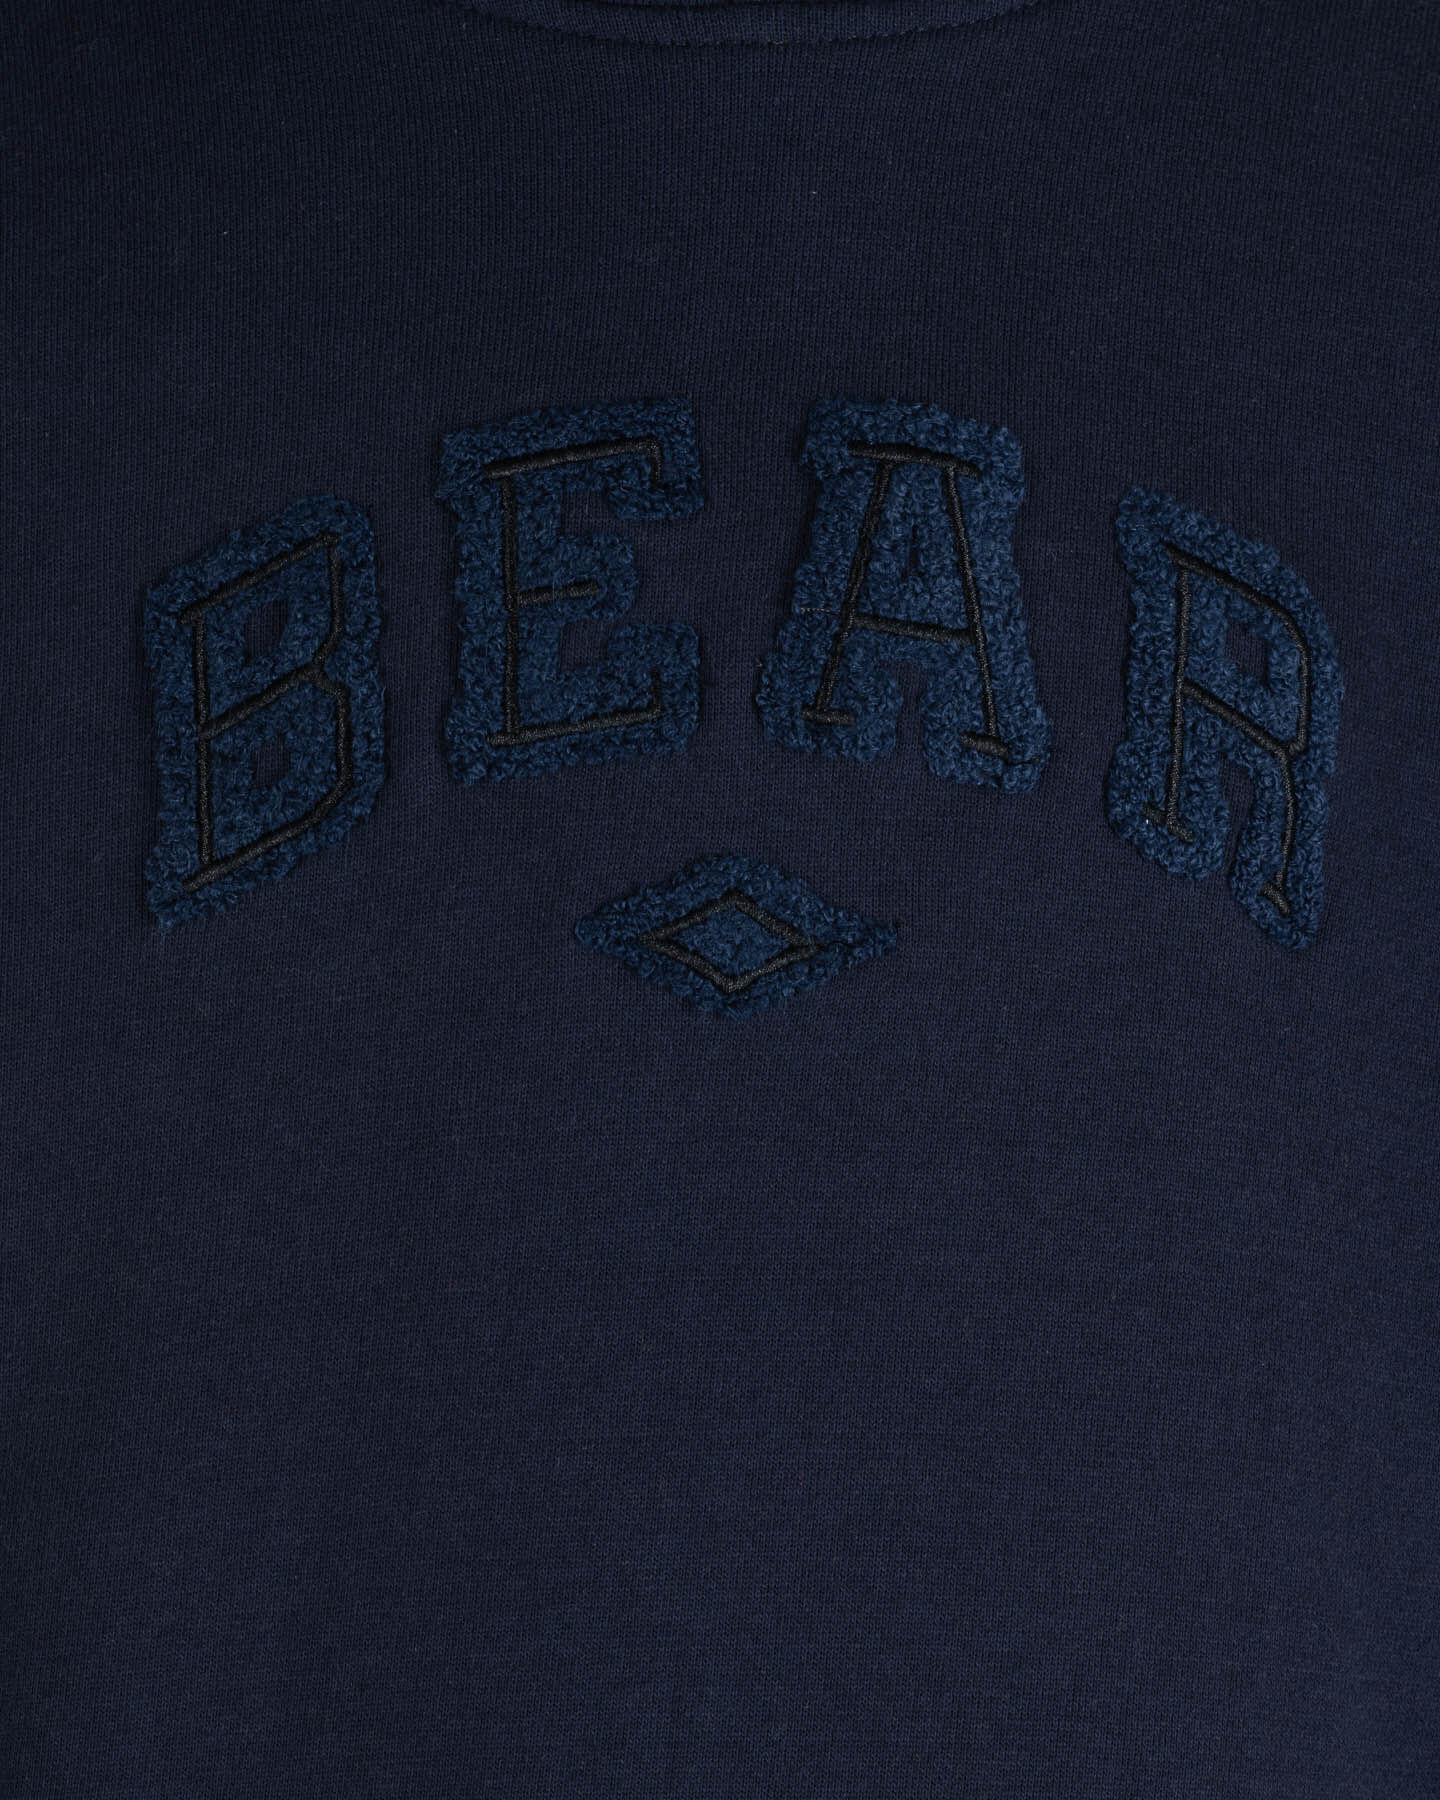  Felpa BEAR SEASONAL JR S4108741|BL|8 scatto 2